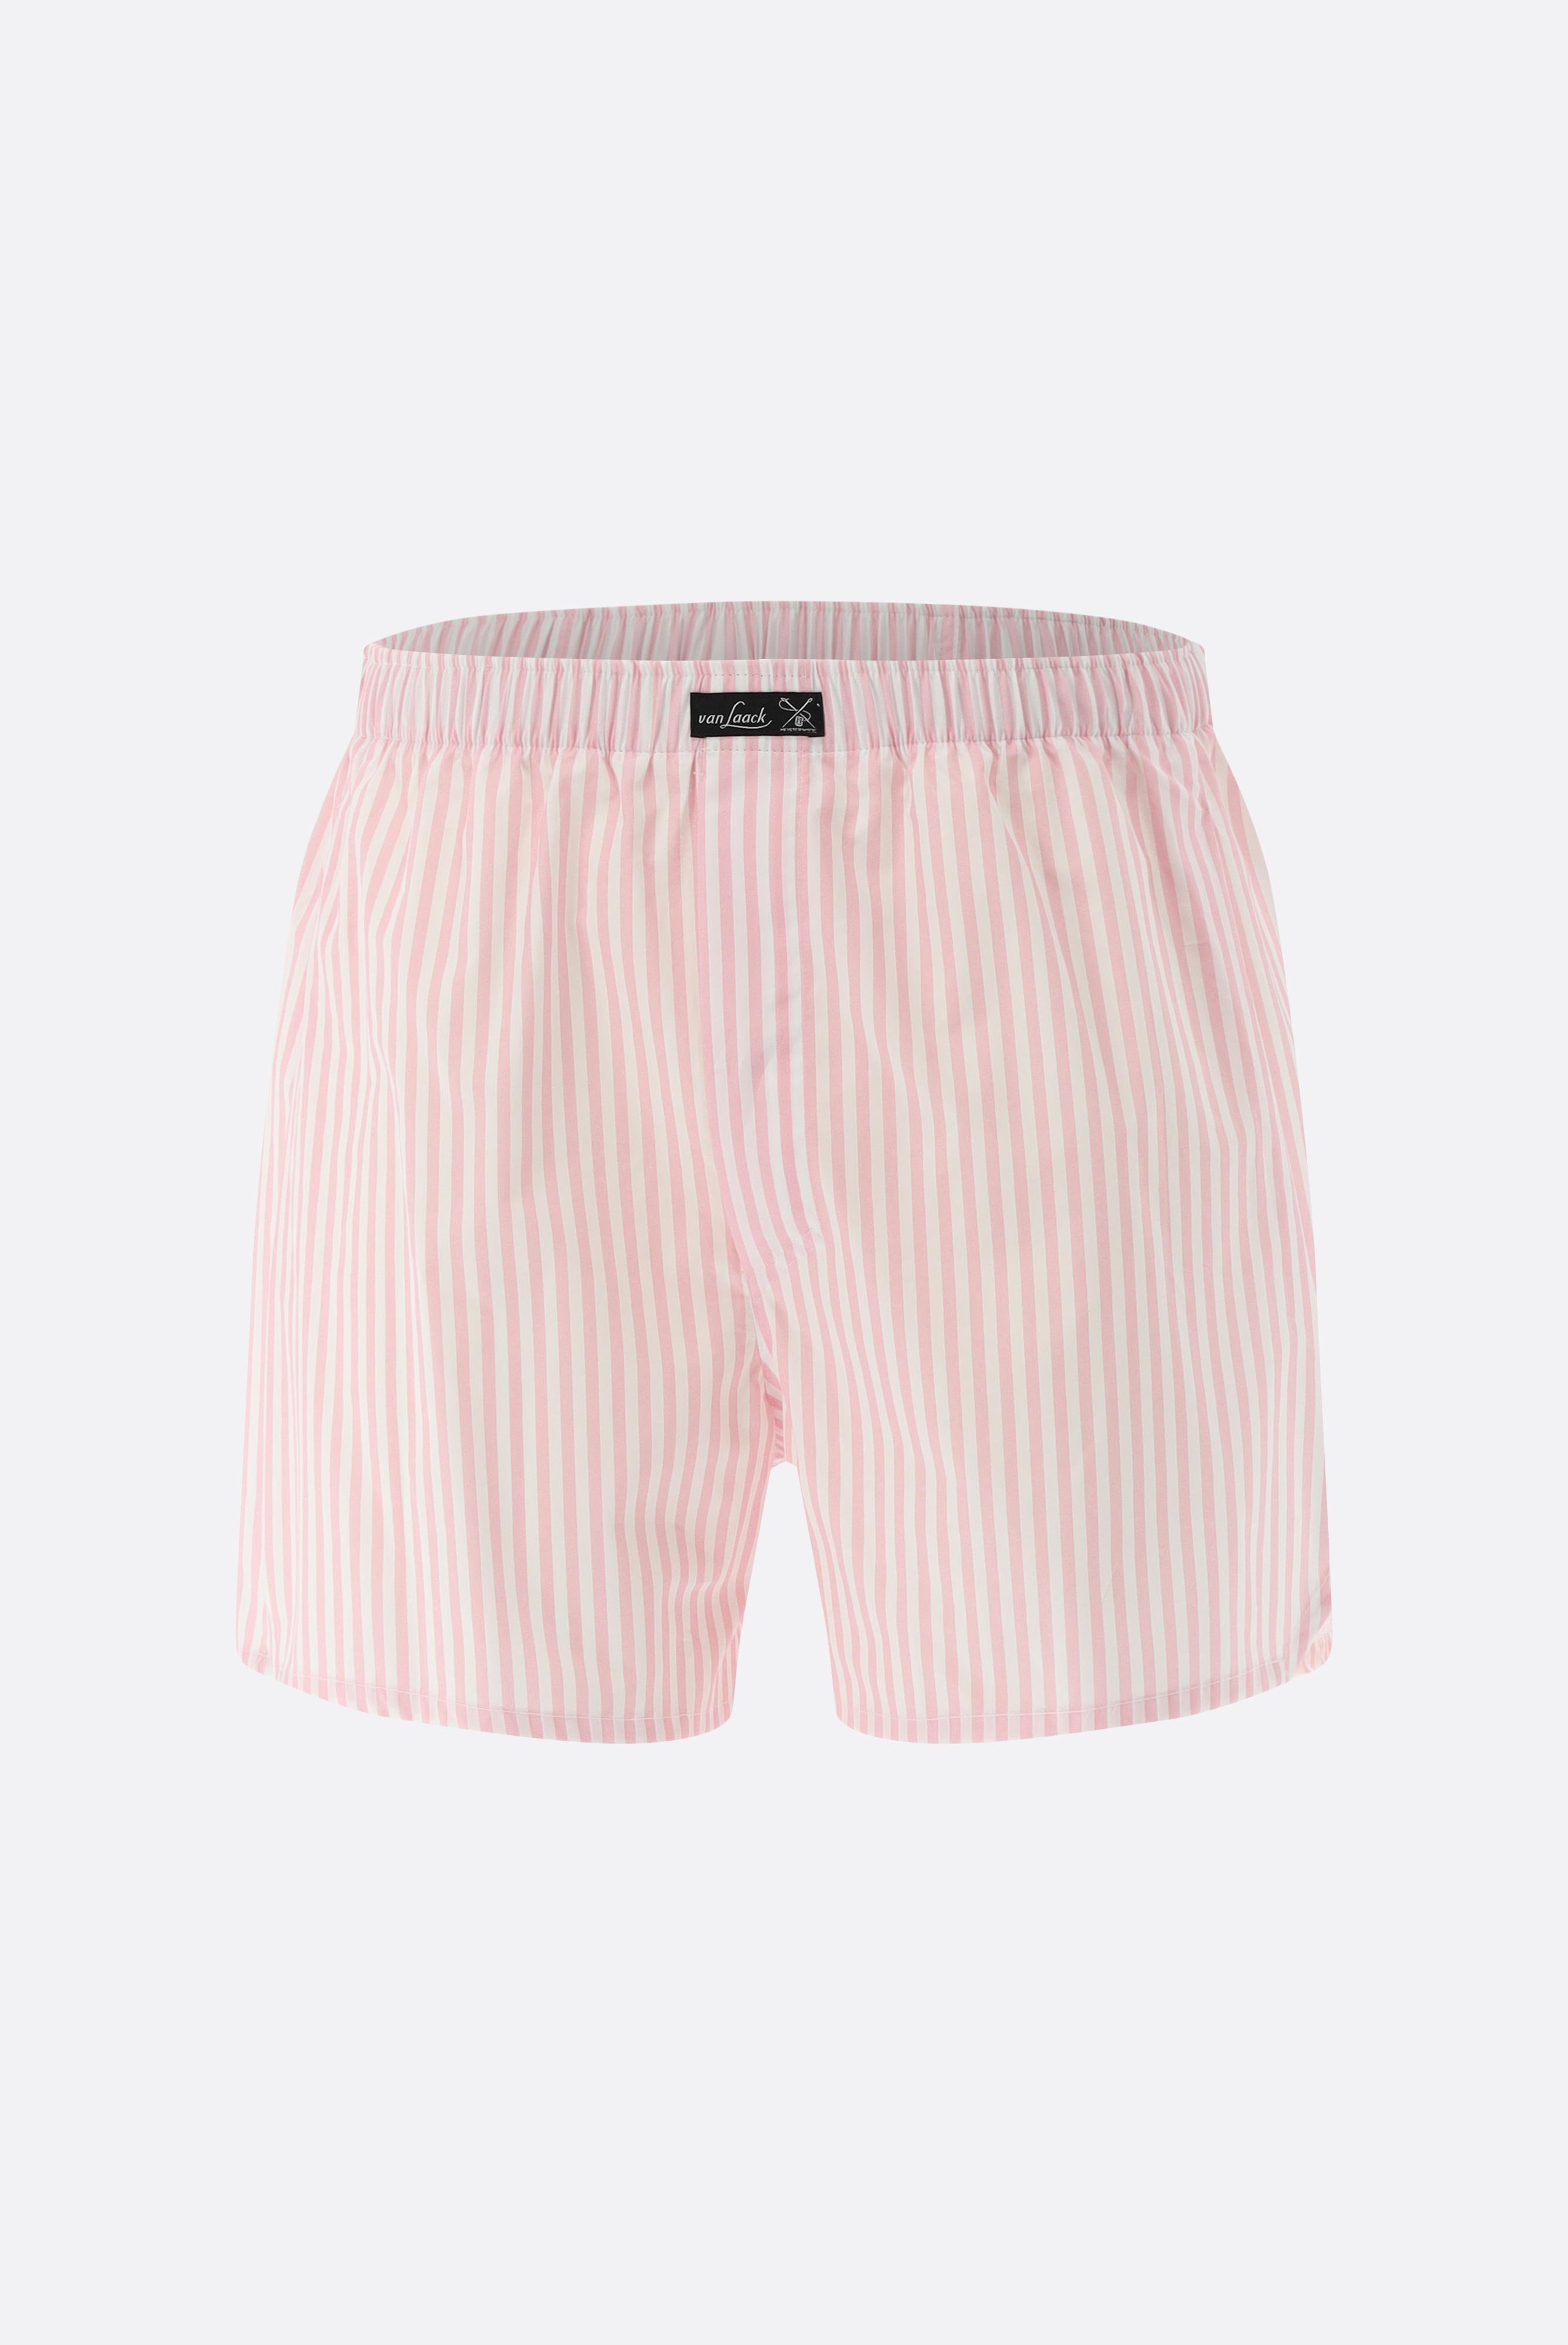 Underwear+Striped Poplin Boxer Shorts+91.1100..170275.510.46